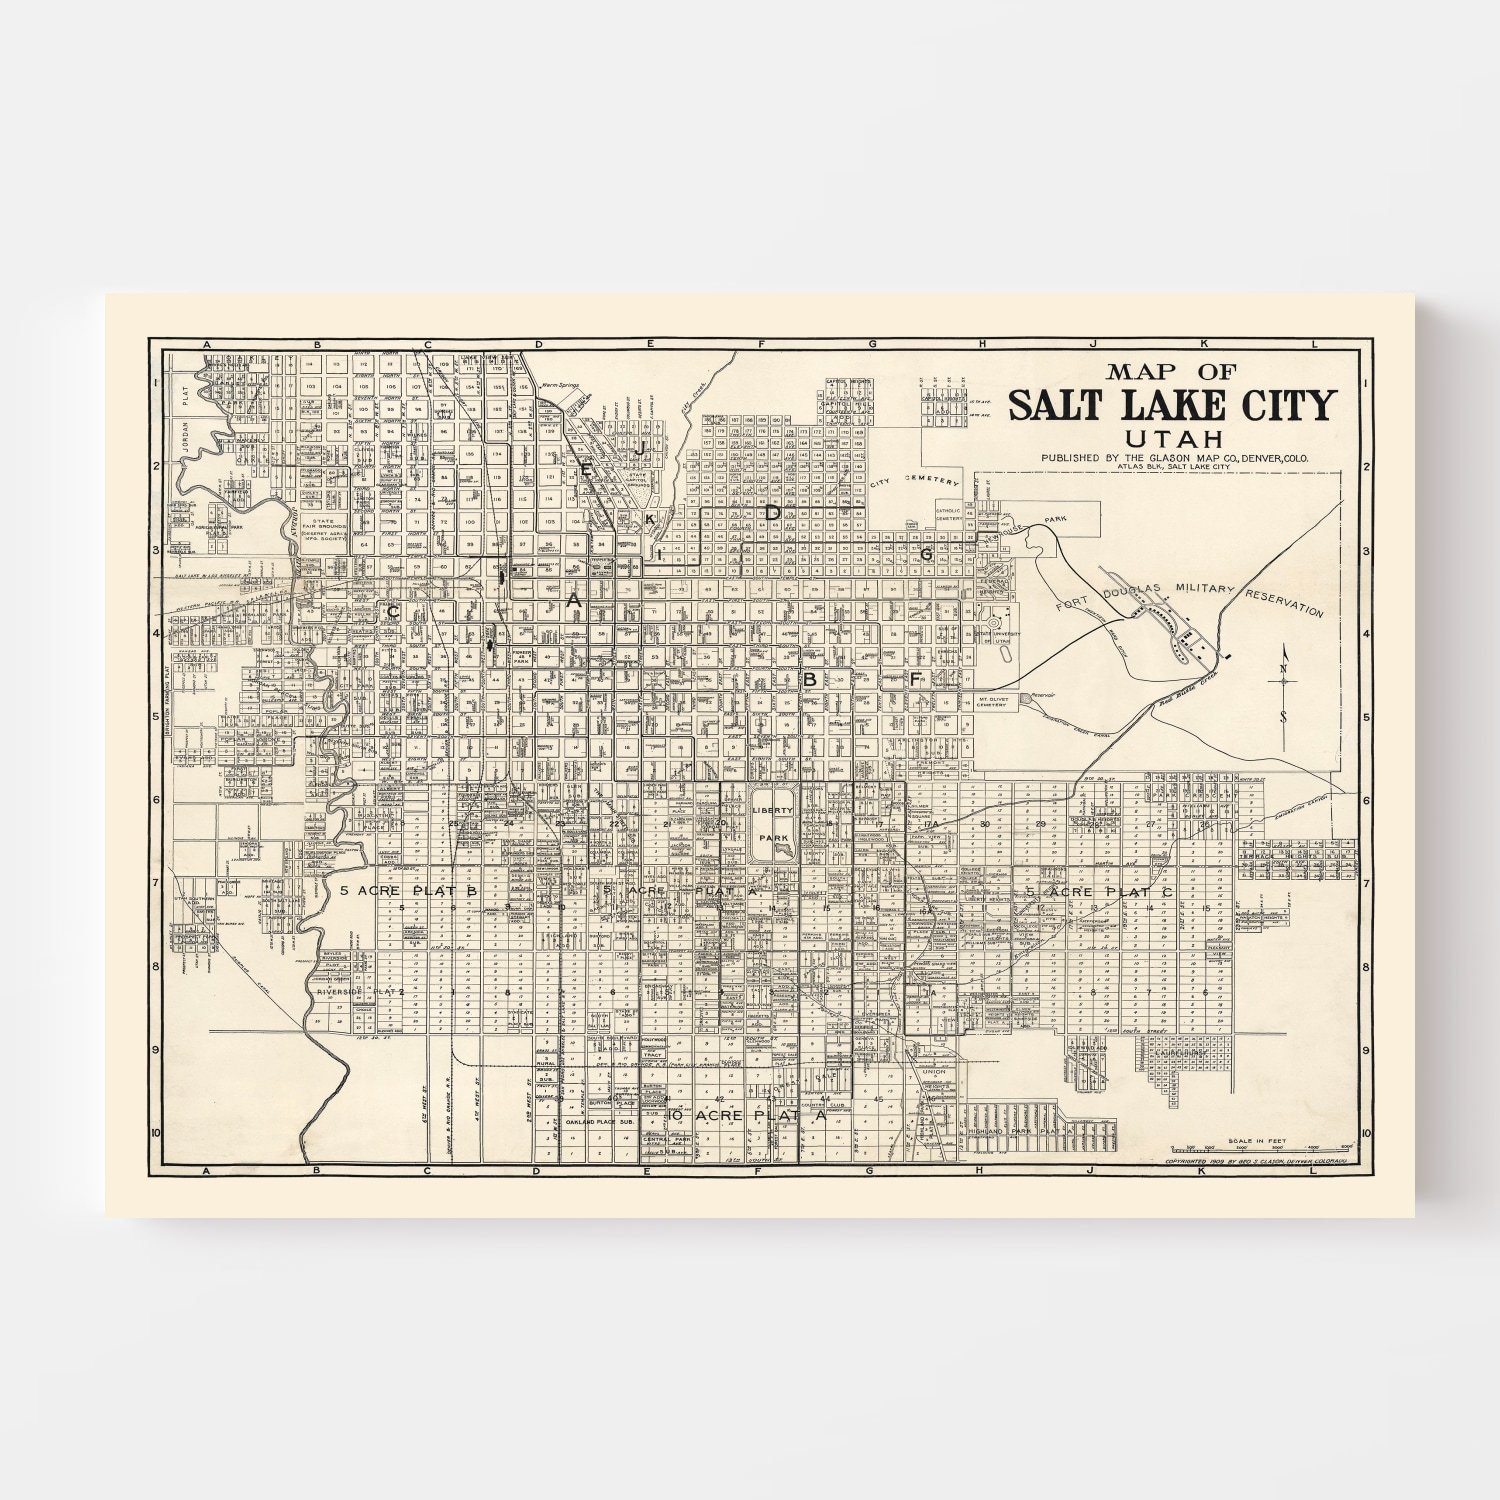 map salt lake city and airport